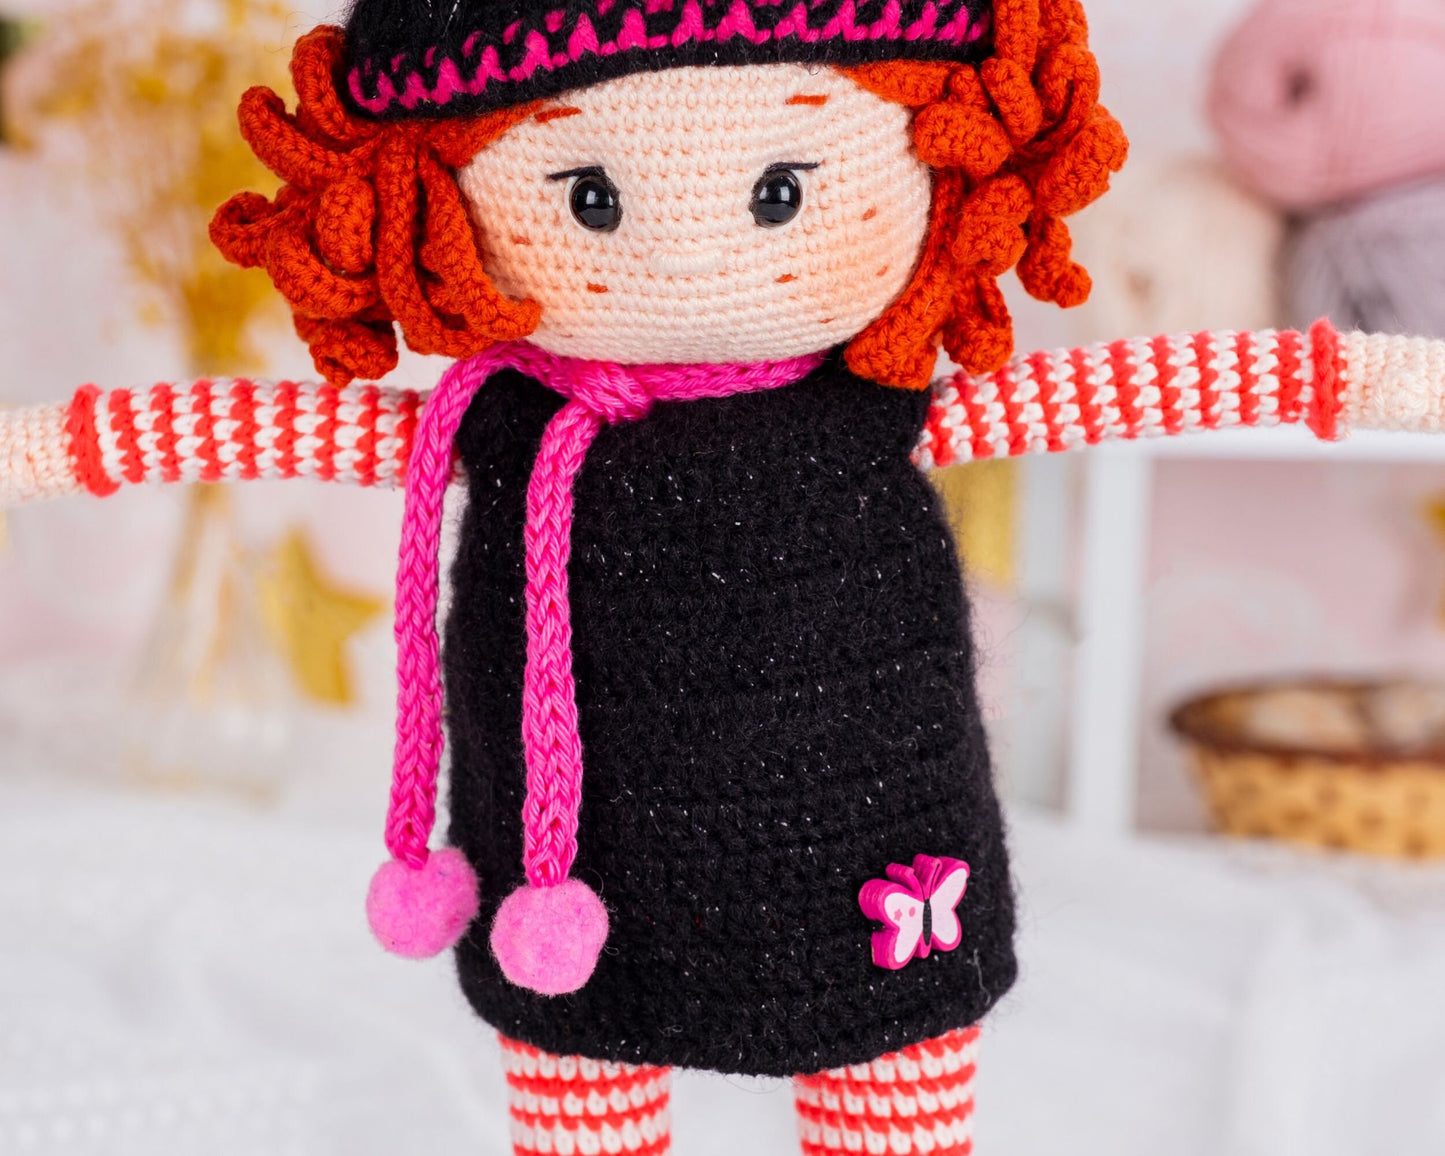 Crochet Doll, Amigurumi Doll, Christmas Amigurumi, Knitted Doll, Best Christmas Gift, Granddaughter Gift, Handmade Doll